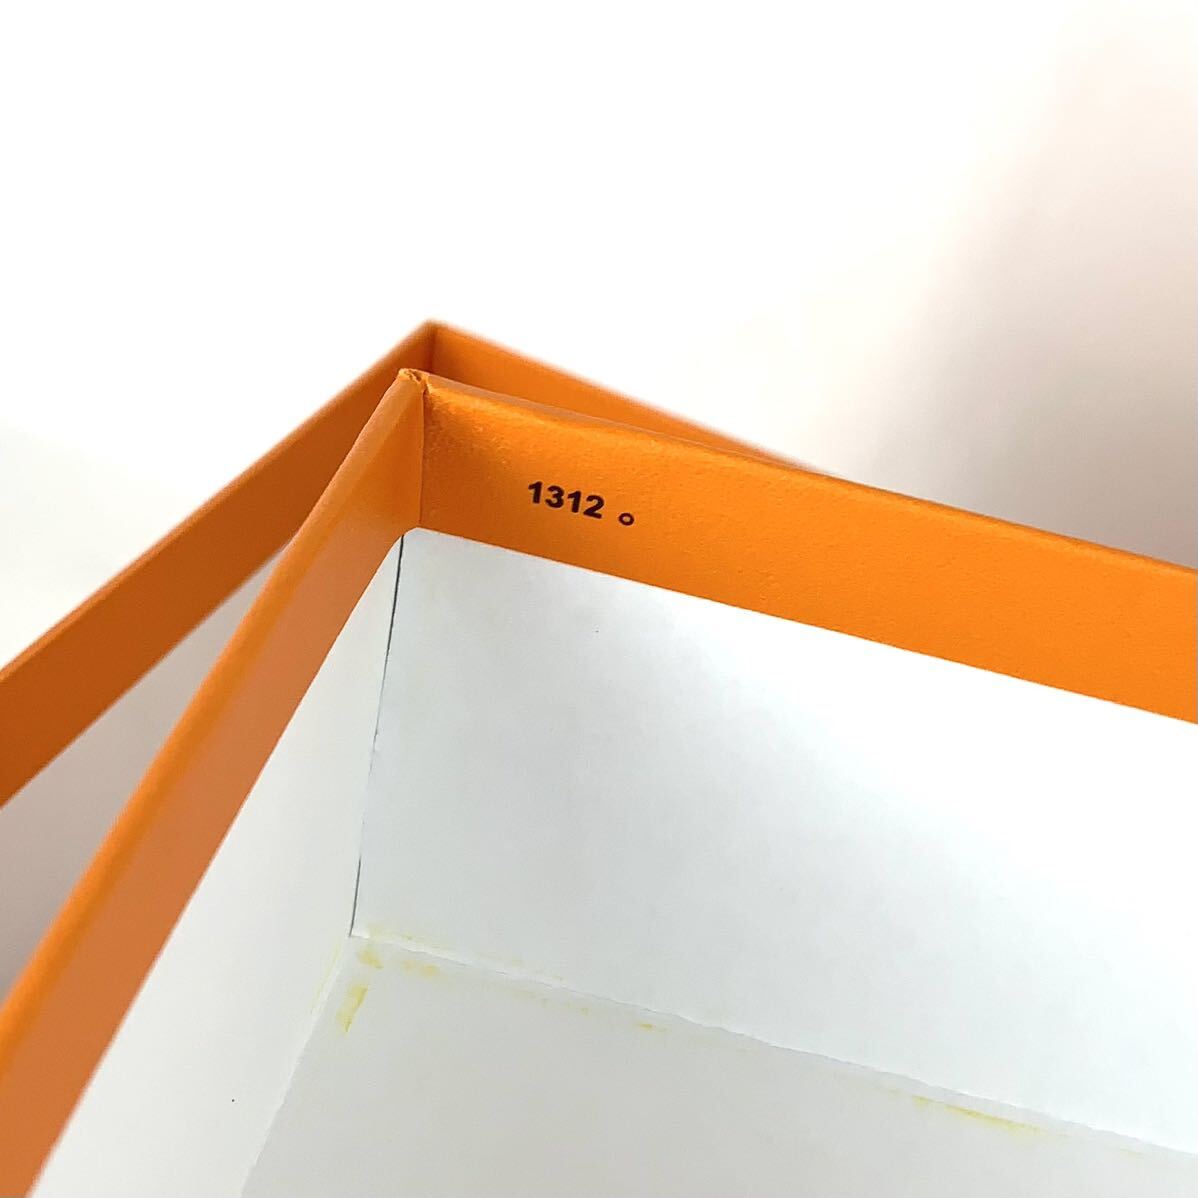 HERMES エルメス 空箱 保存袋 BOX 1312 ボックス 42×42×20大型 バッグ用 化粧箱 バーキン ケリー オレンジ リボン 緩衝材 鞄 保存箱 _画像6